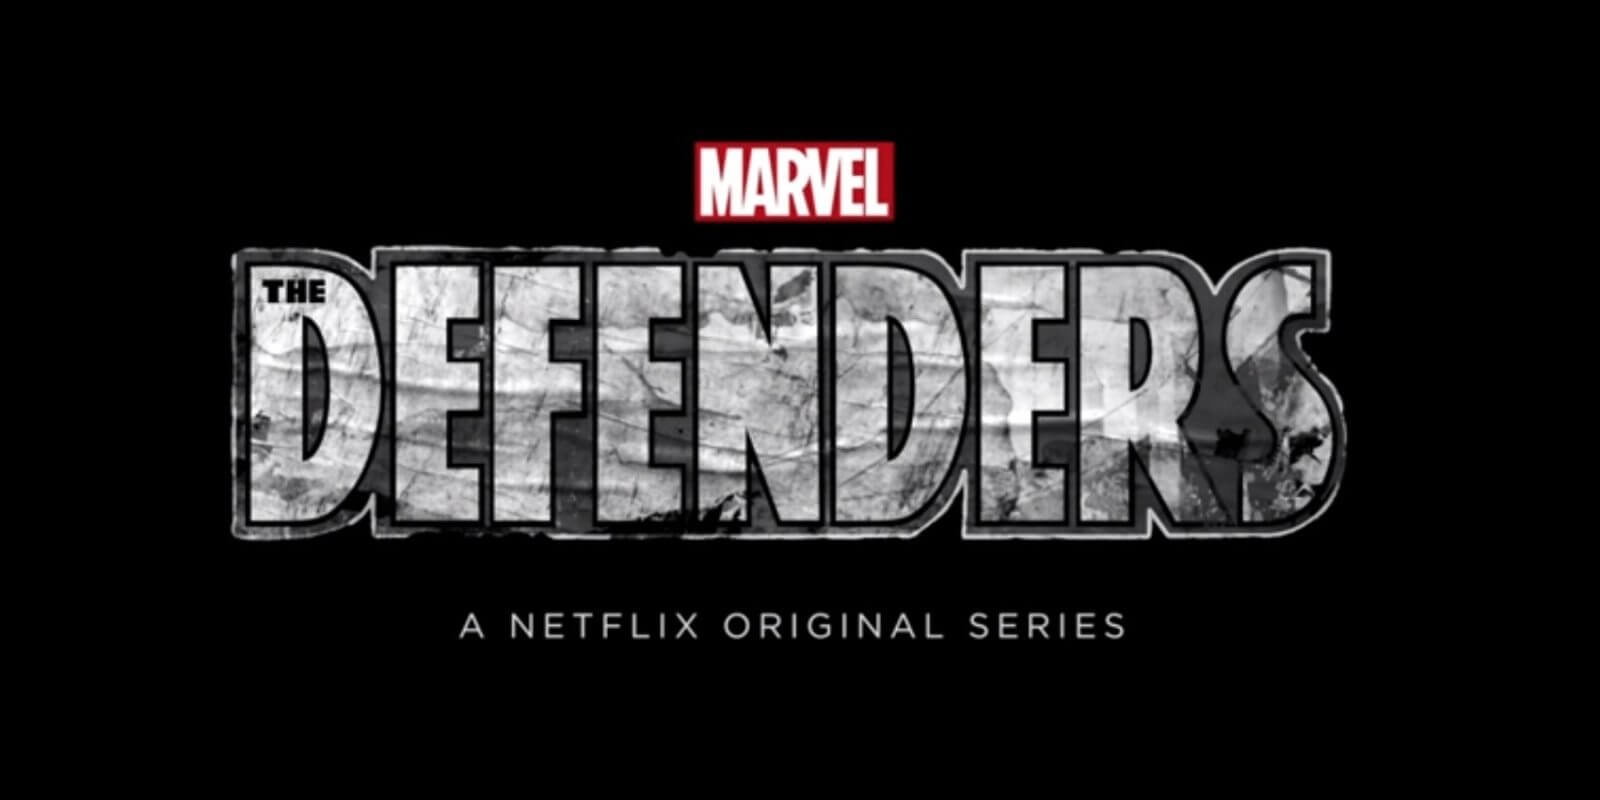 The defenders logo